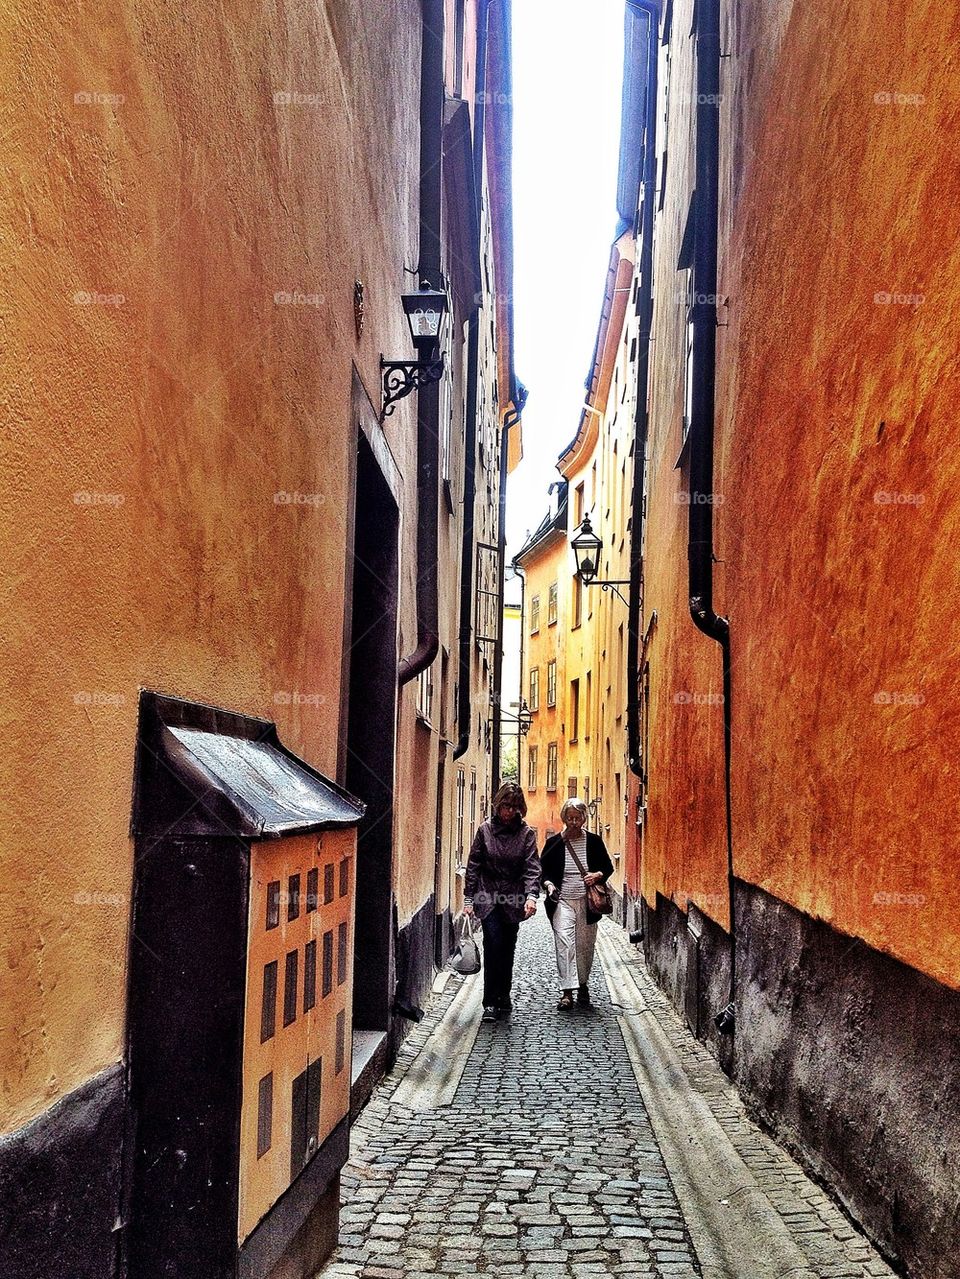 Walking the vinding streets in Stockholm